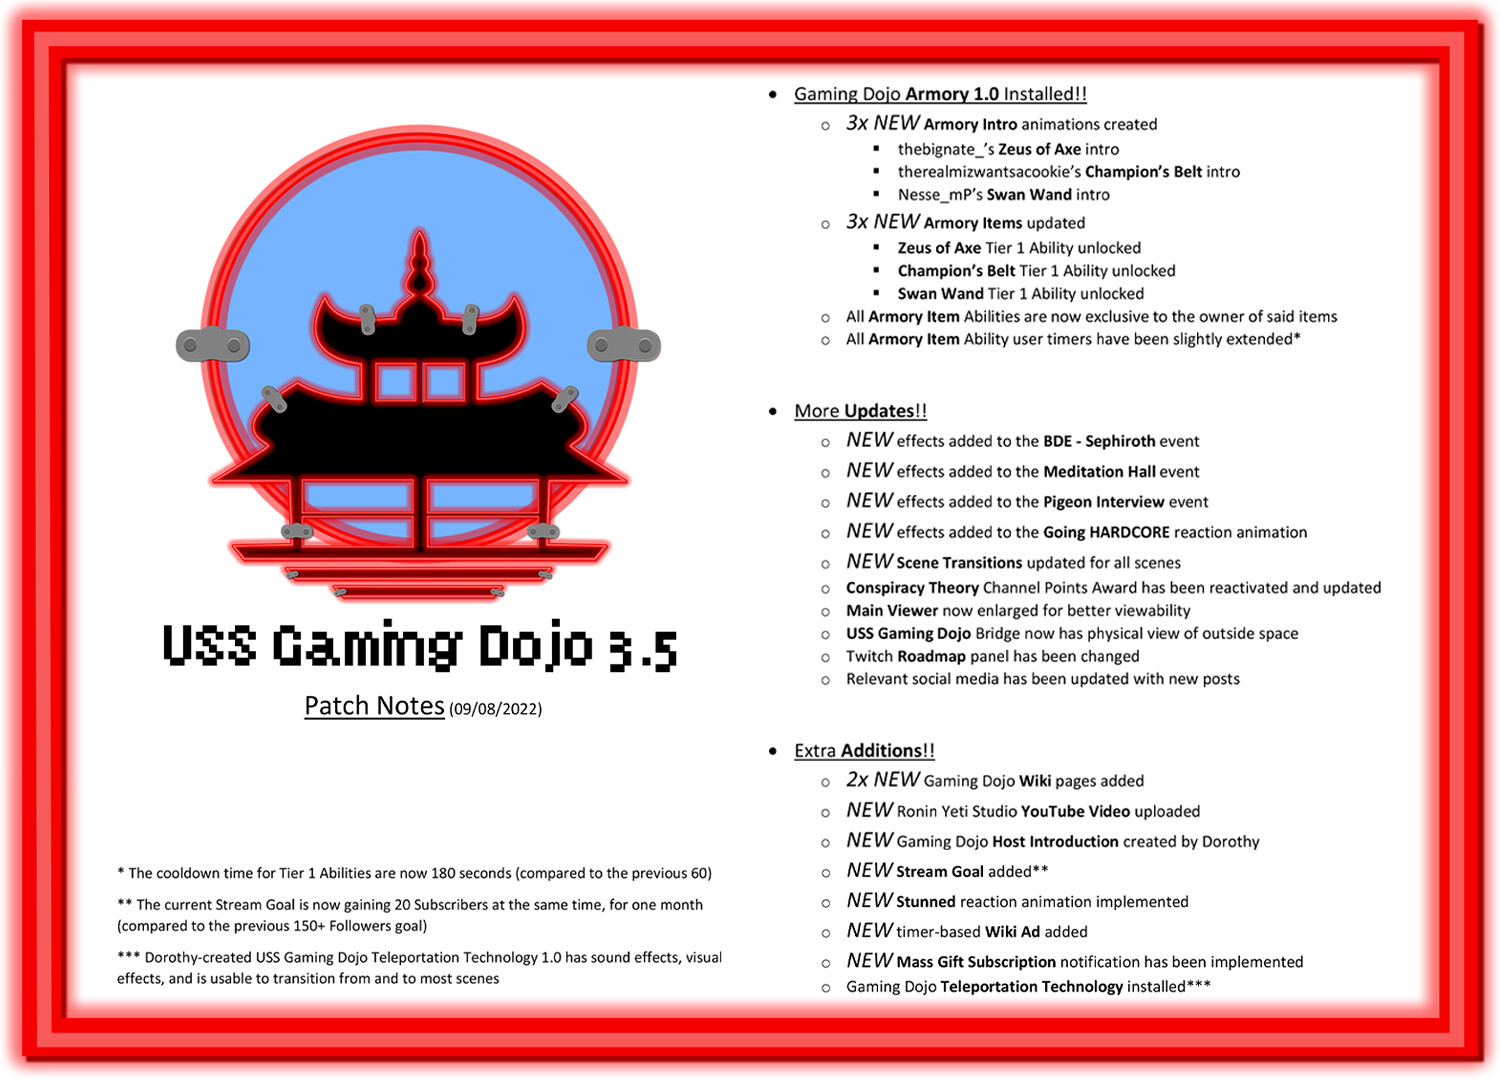 Gaming Dojo 3.5 Patch Notes Visual | RY Streaming